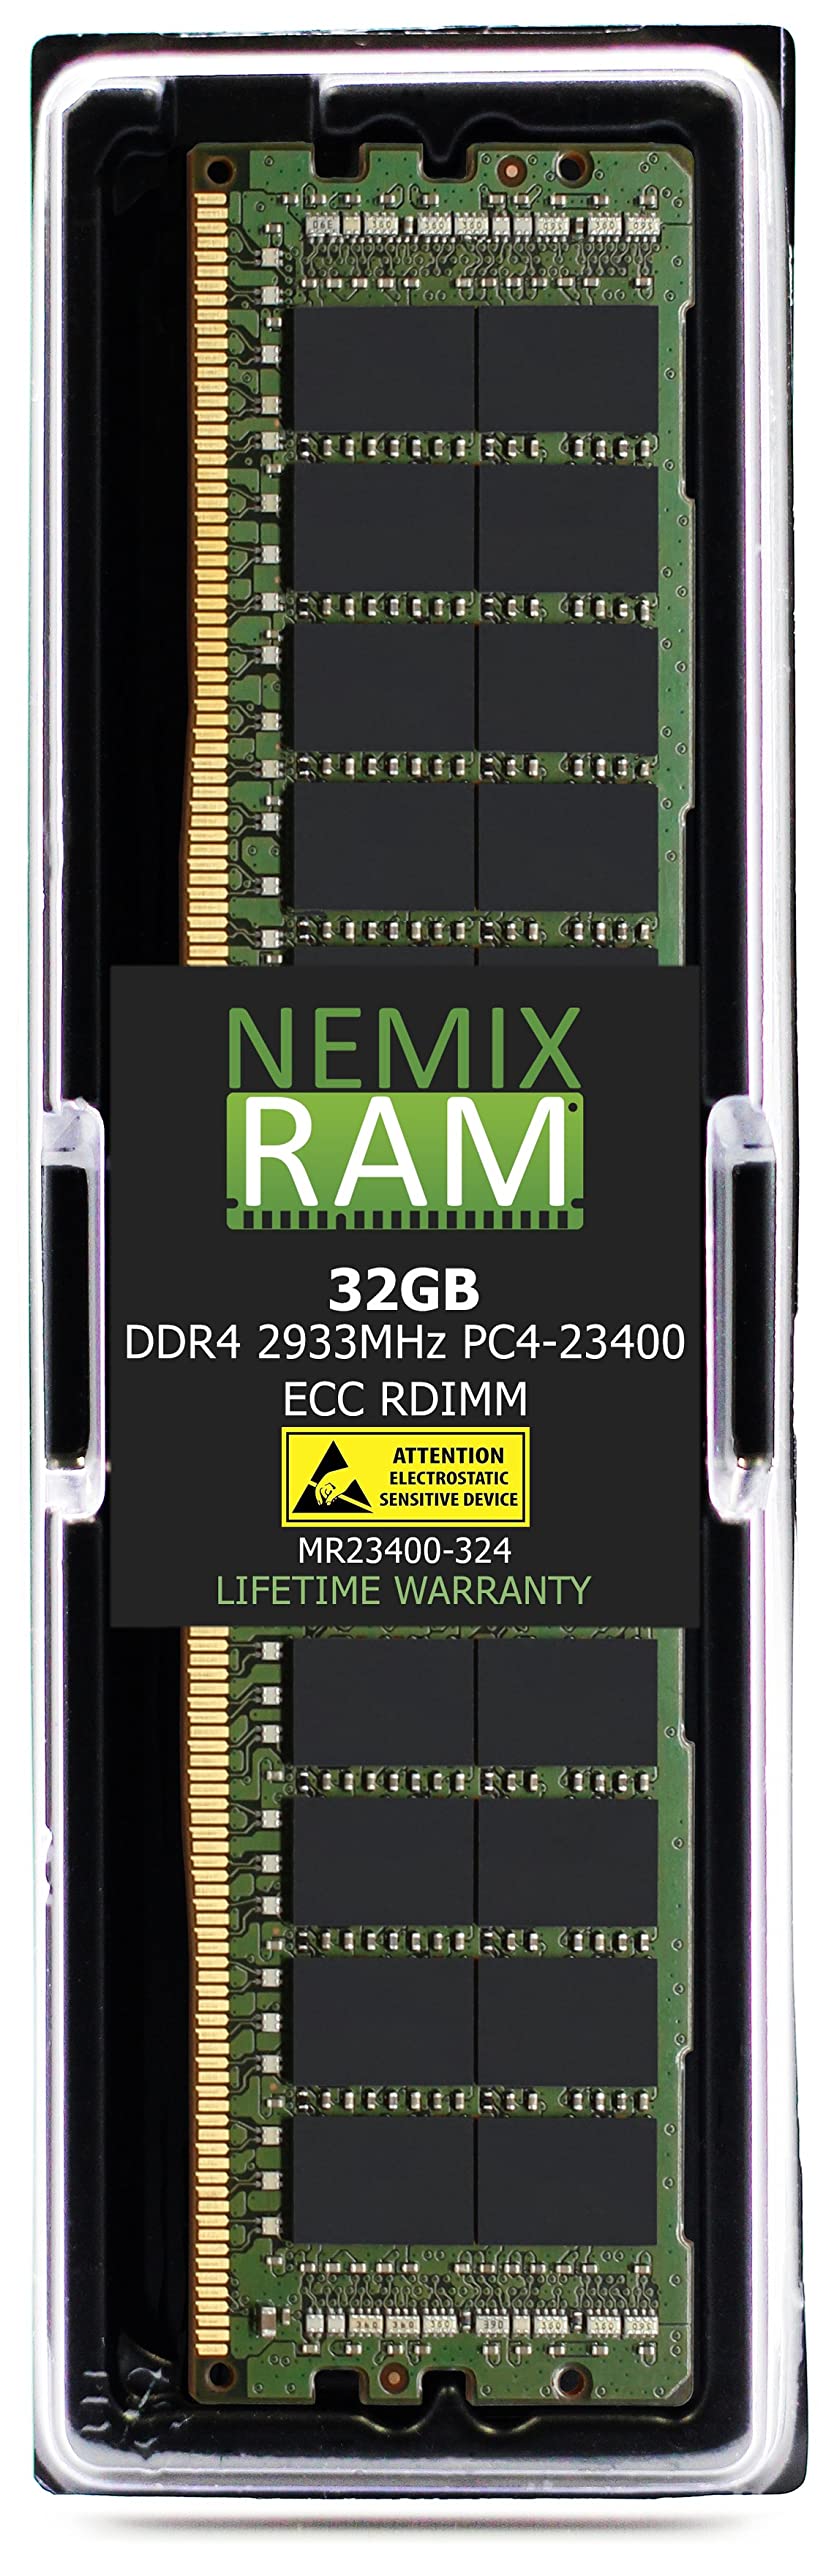 Nemix Ram P19252-001-NMX 32GB DDR4-2933 PC4-23400 メモリアップグレード